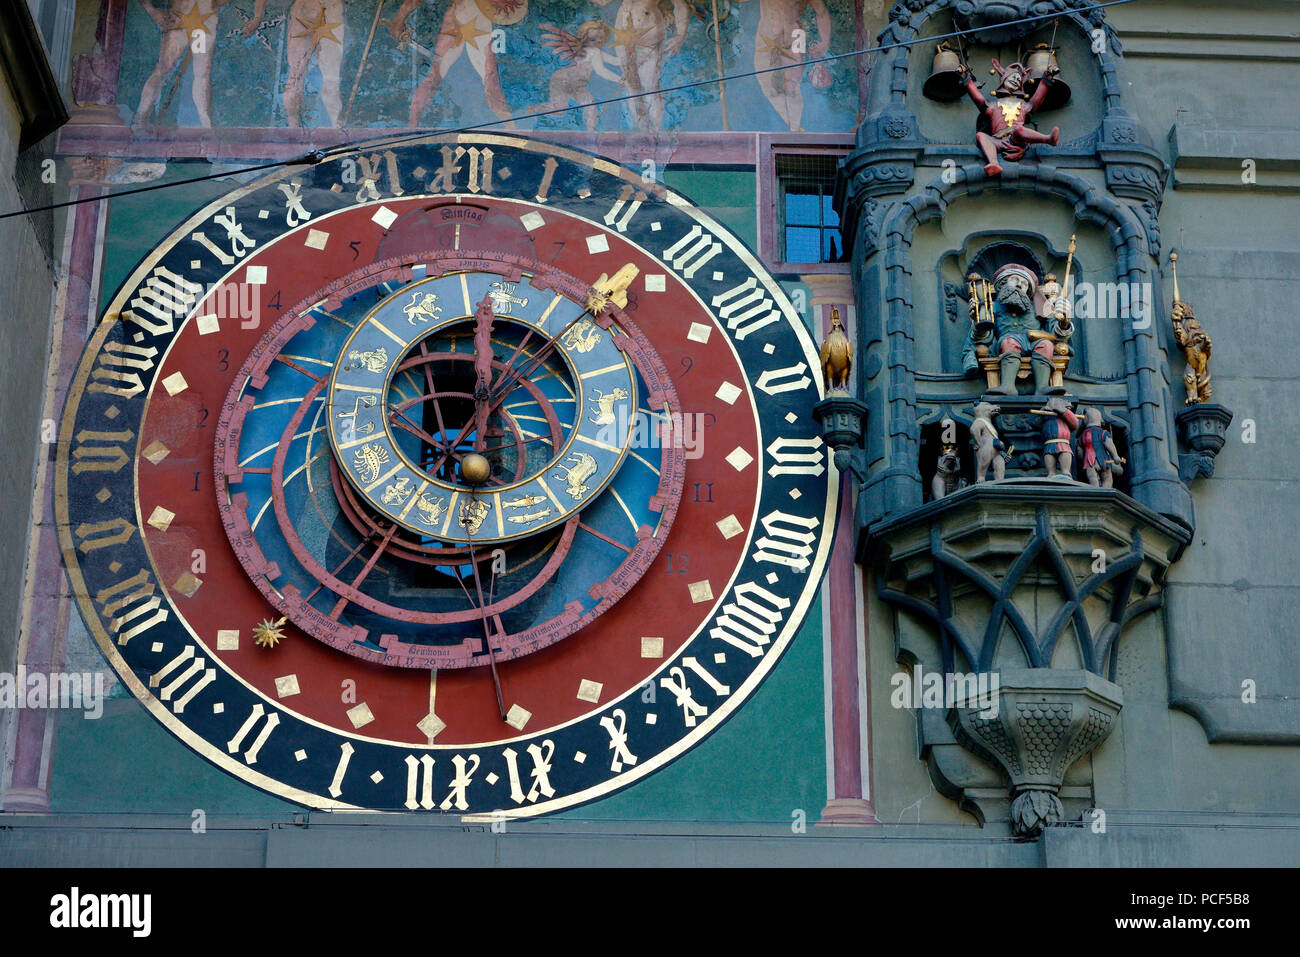 Turmuhr am Zeitglockenturm, Zytglogge, Zytgloggeturm, Astrolabiumsuhr, Berner Altstadt, Berna, Kanton Bern, Svizzera, Europa Foto Stock